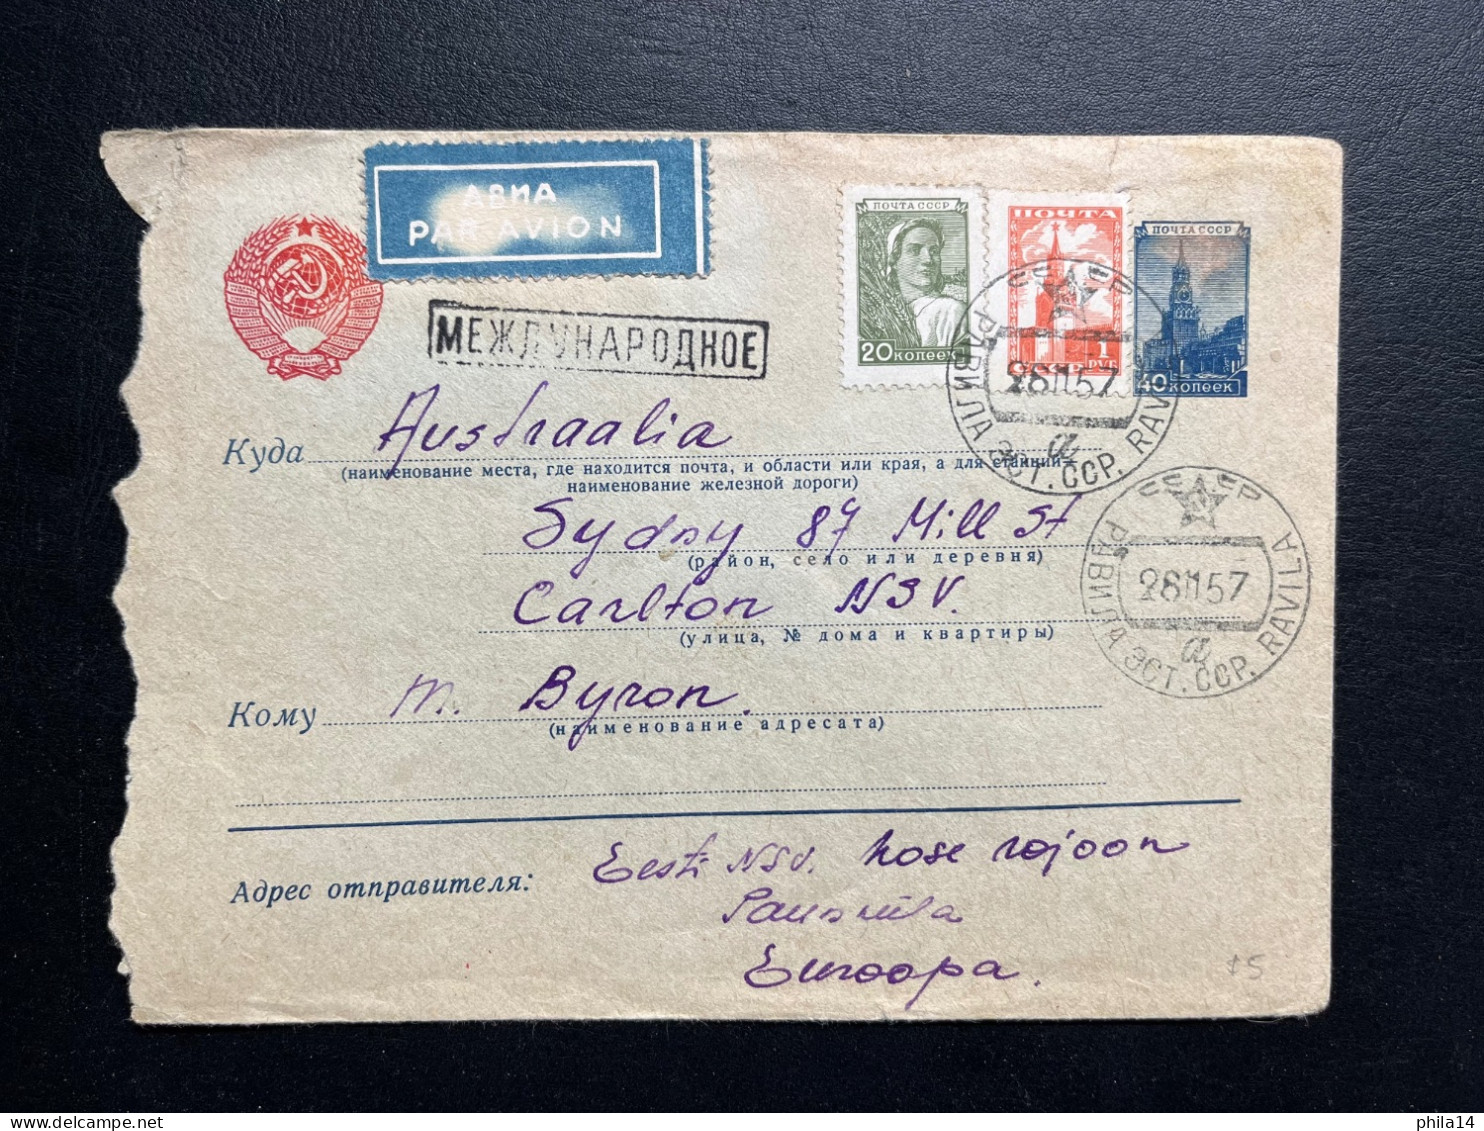 ENVELOPPE URSS CCCP 1957 POUR L'AUSTRALIE - Cartas & Documentos